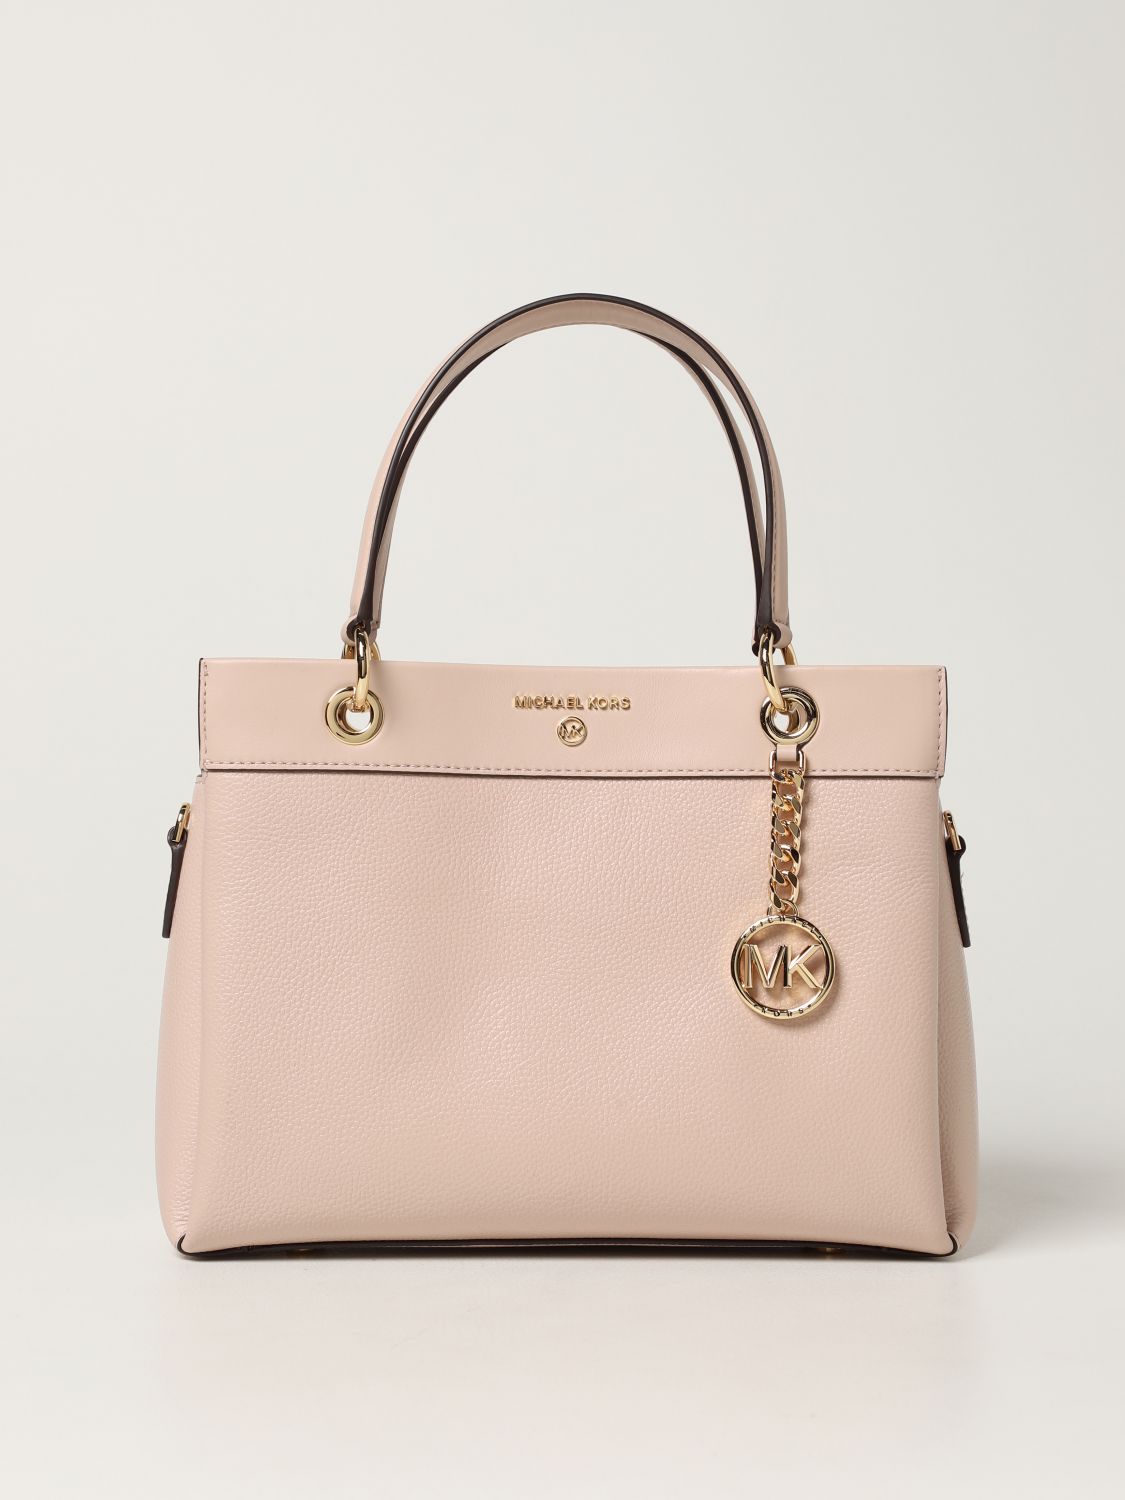 *ON SALE*MICHAEL KORS #40067 Blush Pink Saffiano Leather Tote Bag